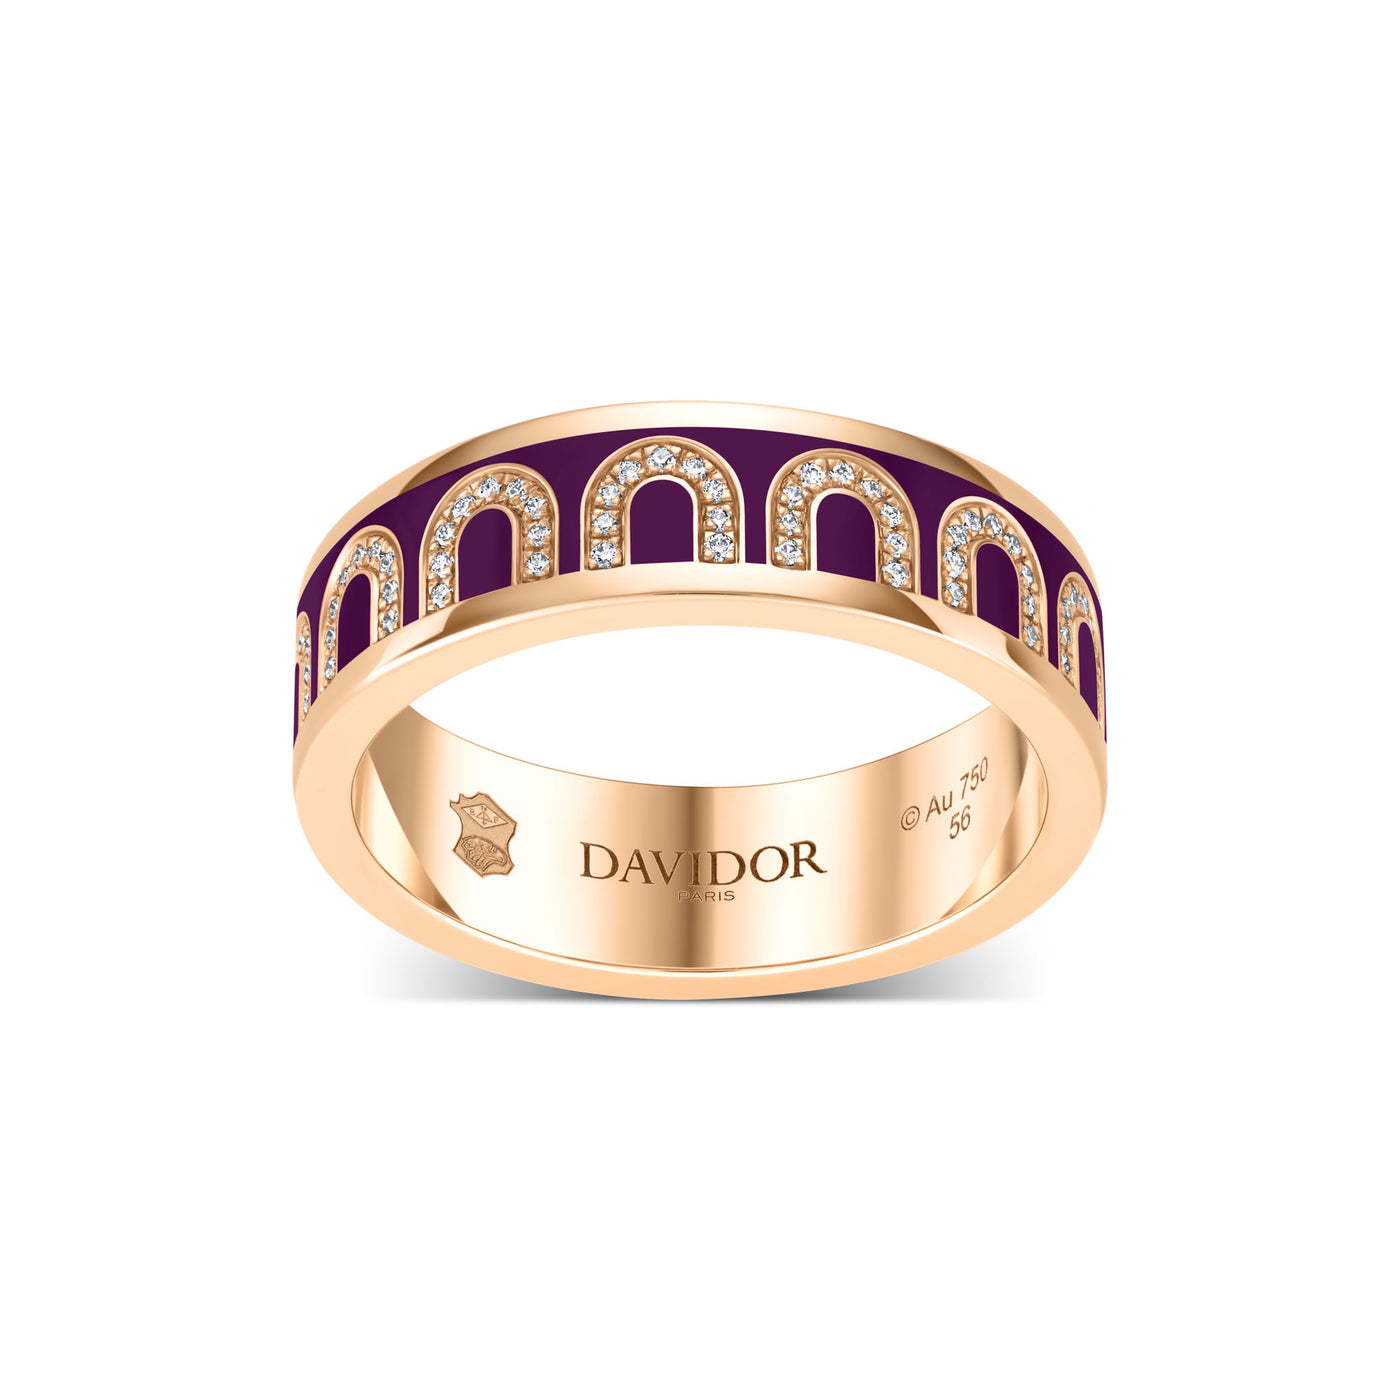 L'Arc de DAVIDOR Ring MM, 18k Rose Gold with Aubergine Lacquered Ceramic and Arcade Diamonds - DAVIDOR